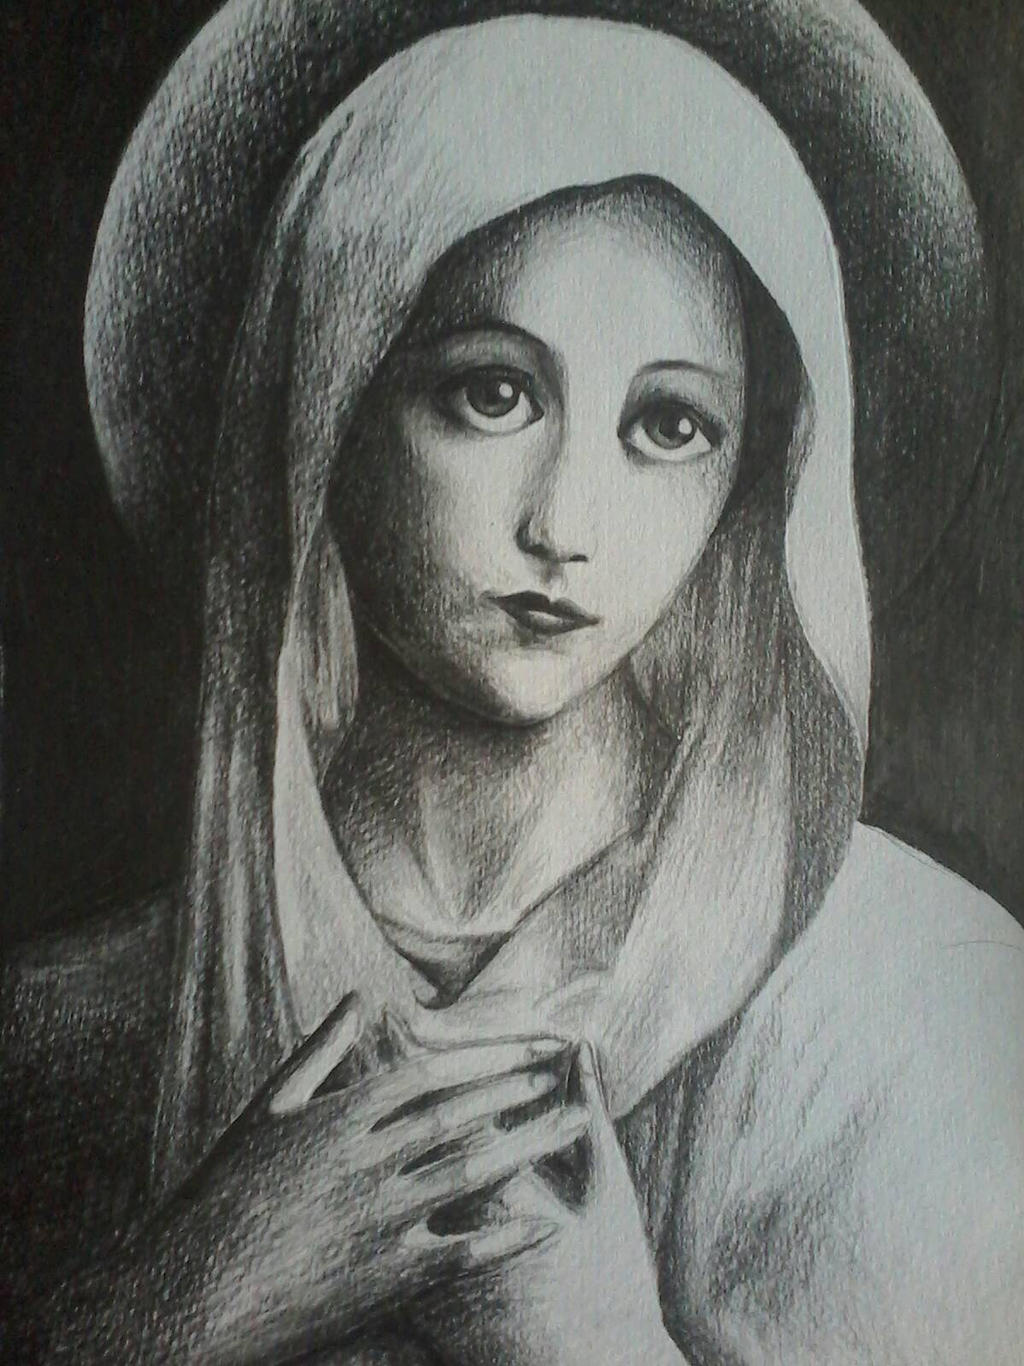 Virgin Mary by Alope11 on DeviantArt